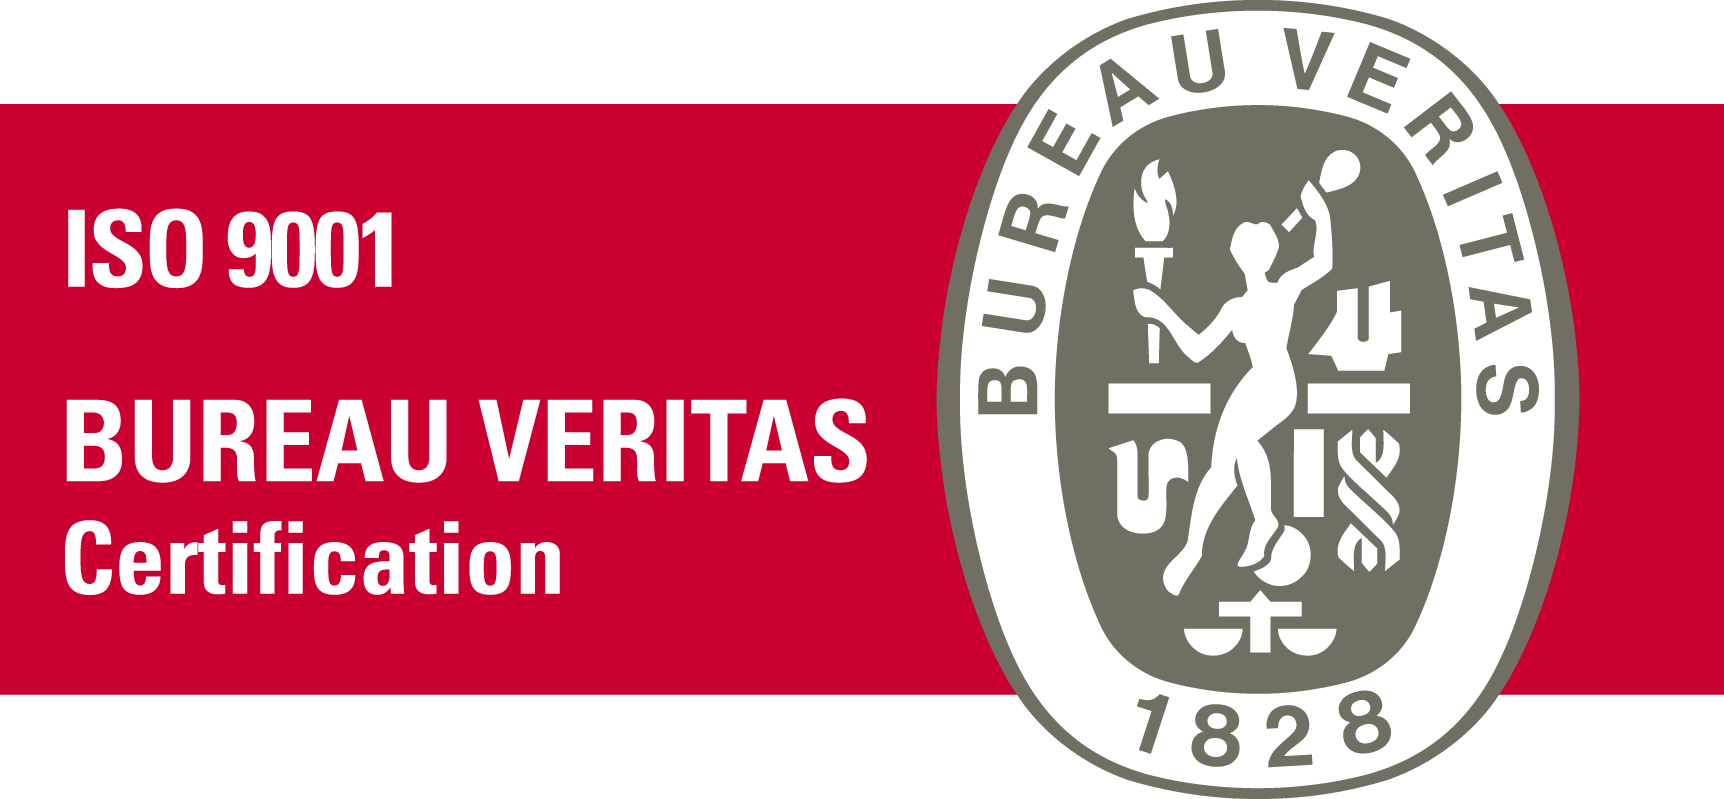 Bureau Veritas Certification ISO 9001 - Rotair